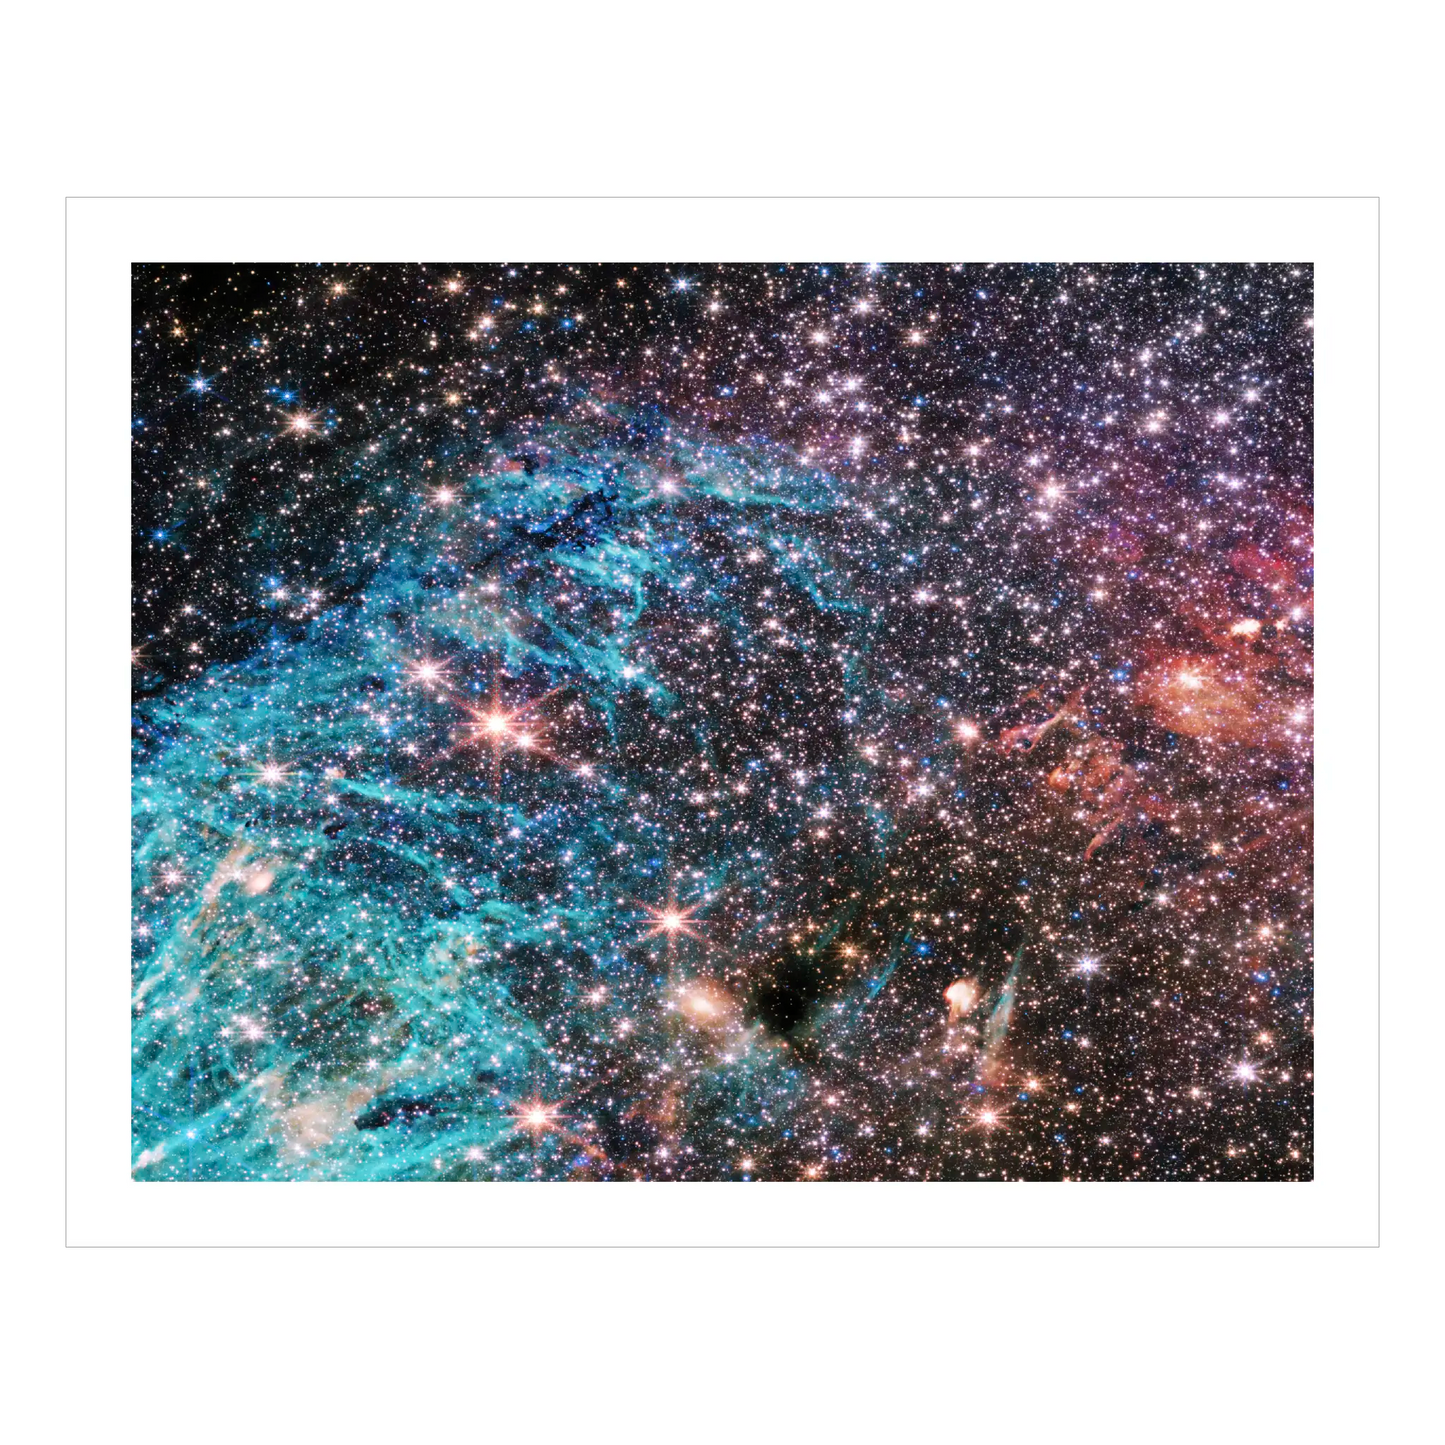 Heart of the Milky Way (Sagittarius C) - Section B